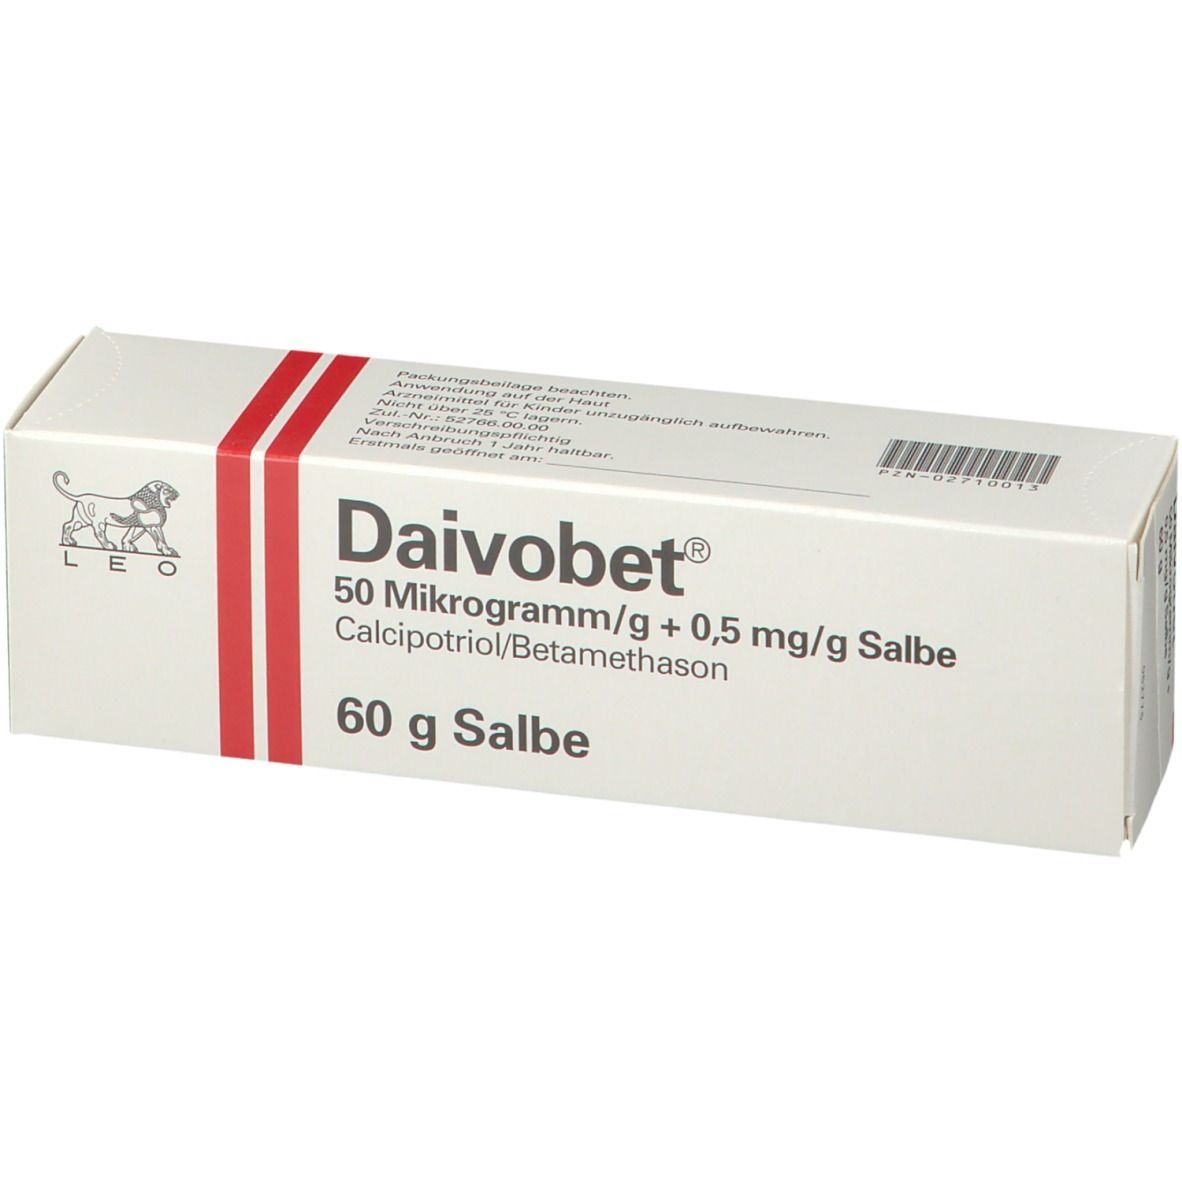 Daivobet® 50 Mikrogramm/g + 0,5 mg/g Salbe